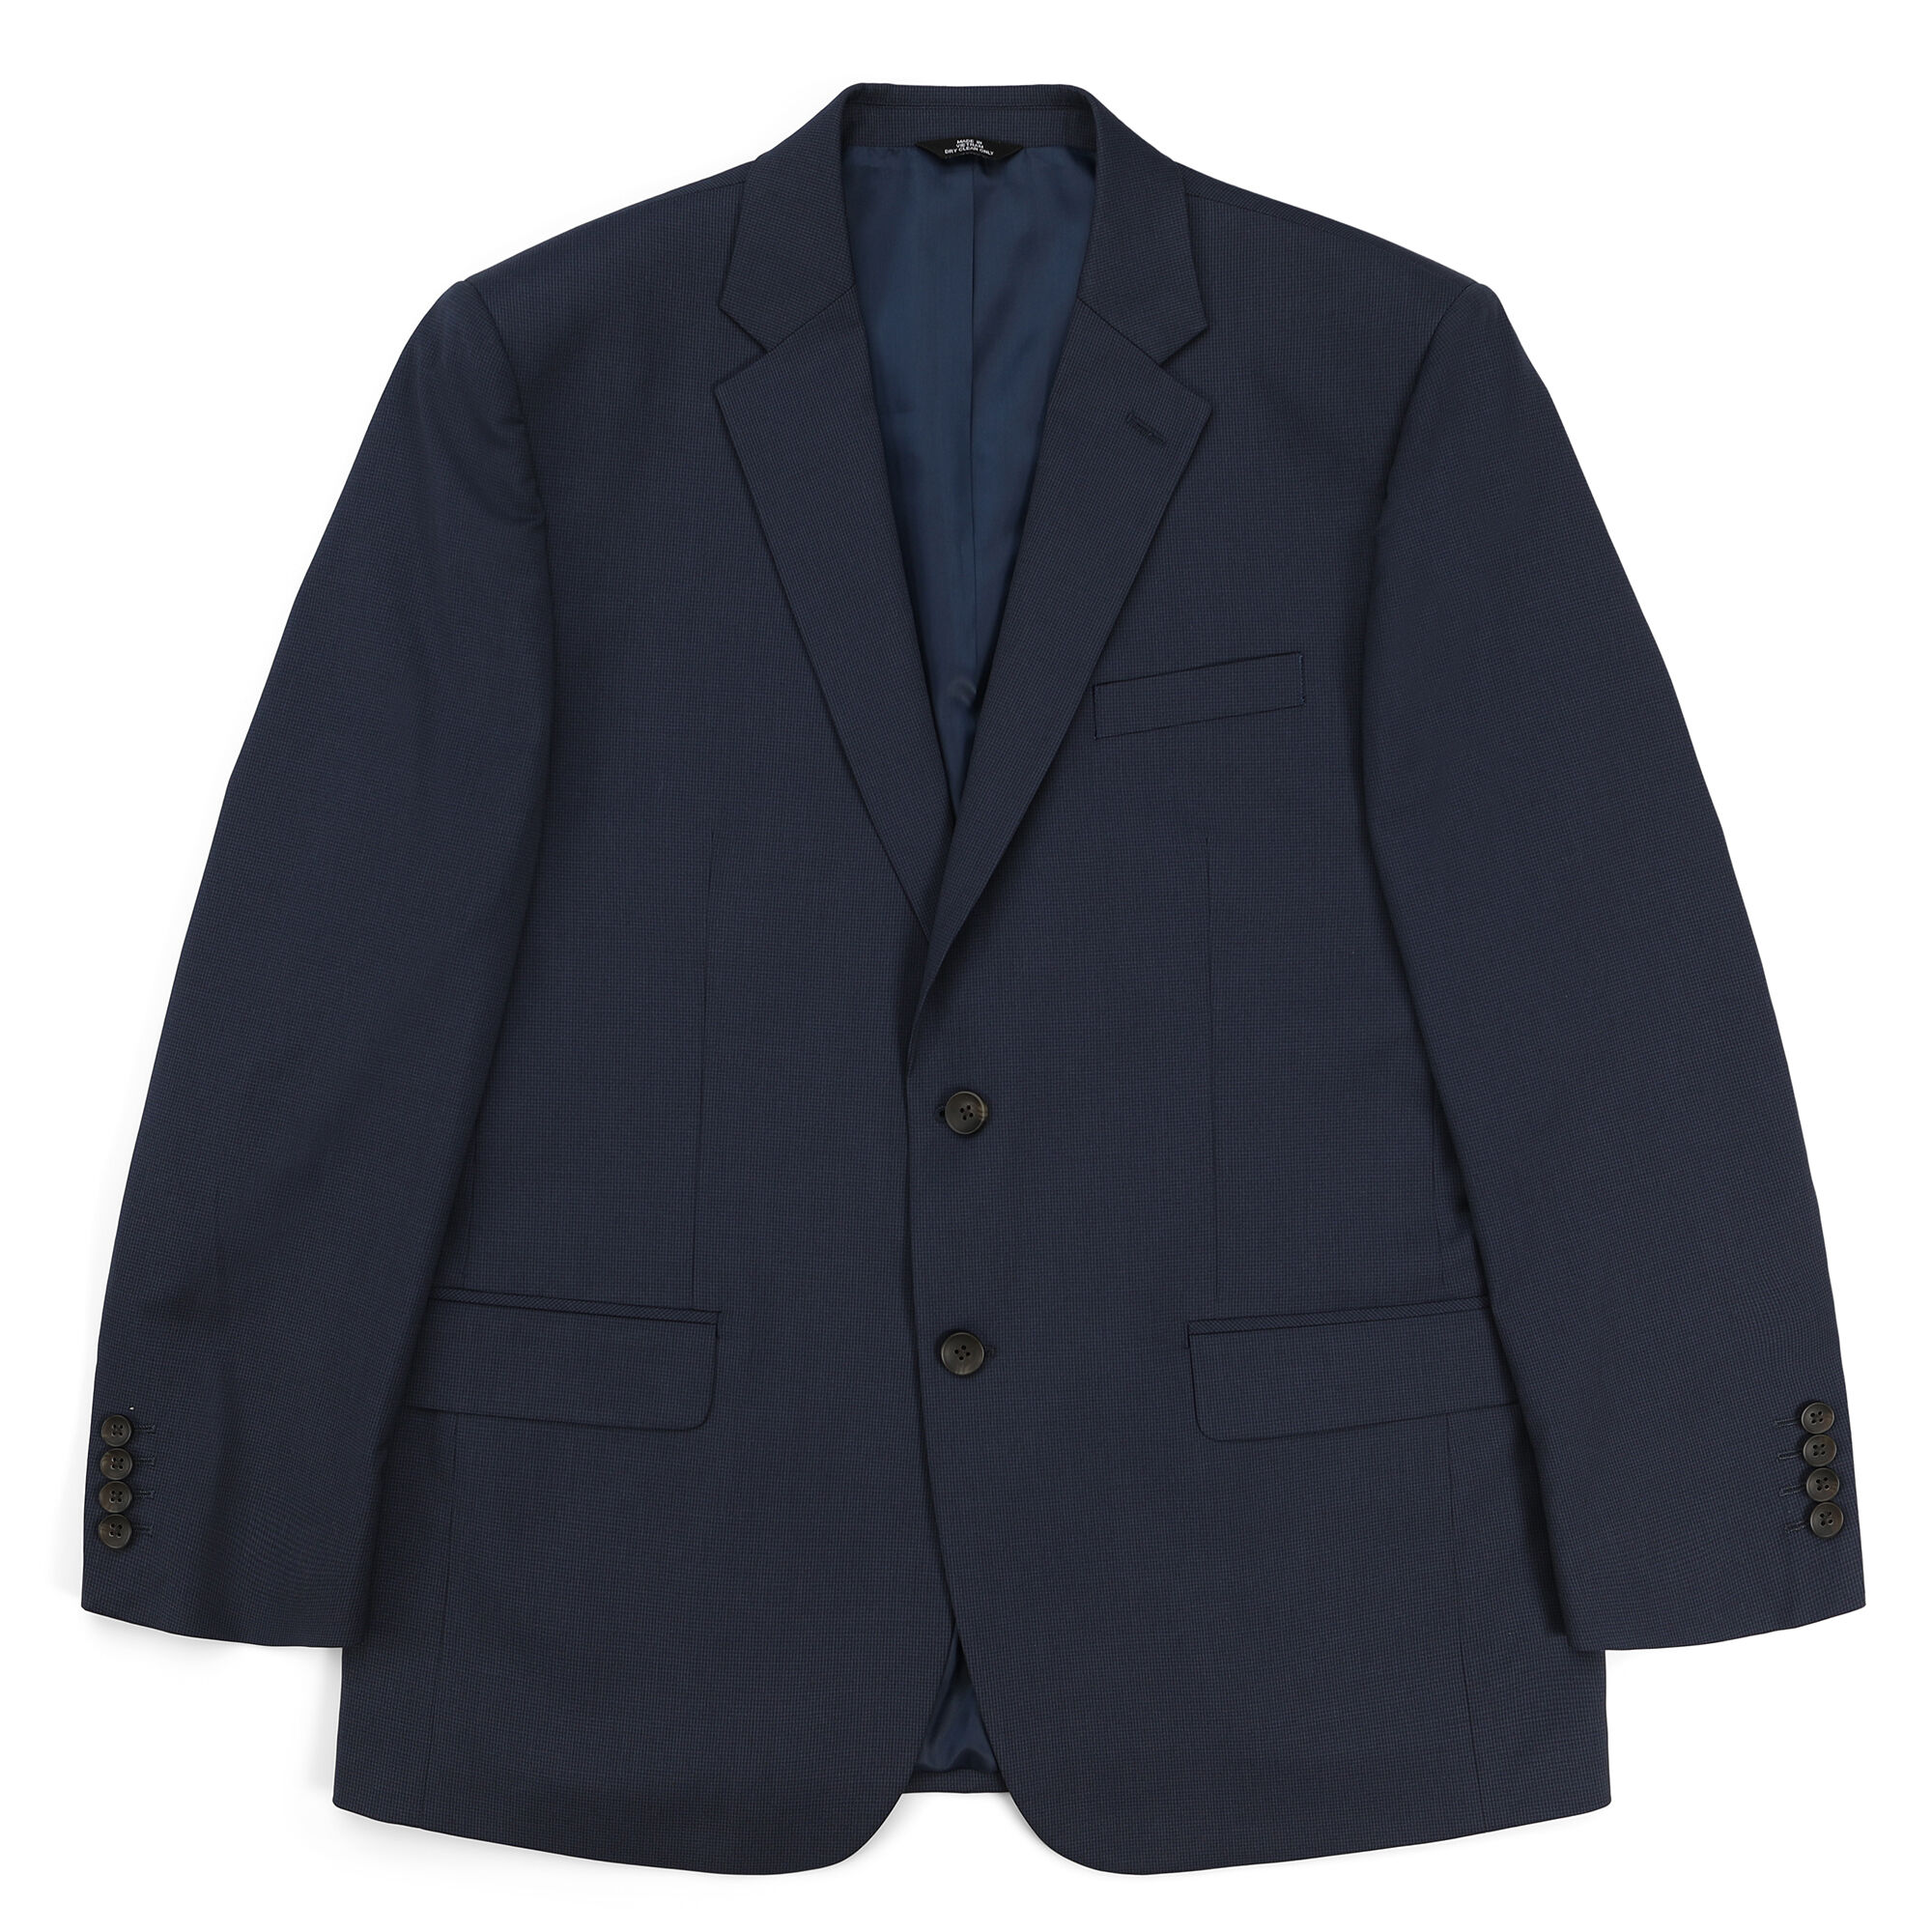 Haggar Suit Jacket Size Chart